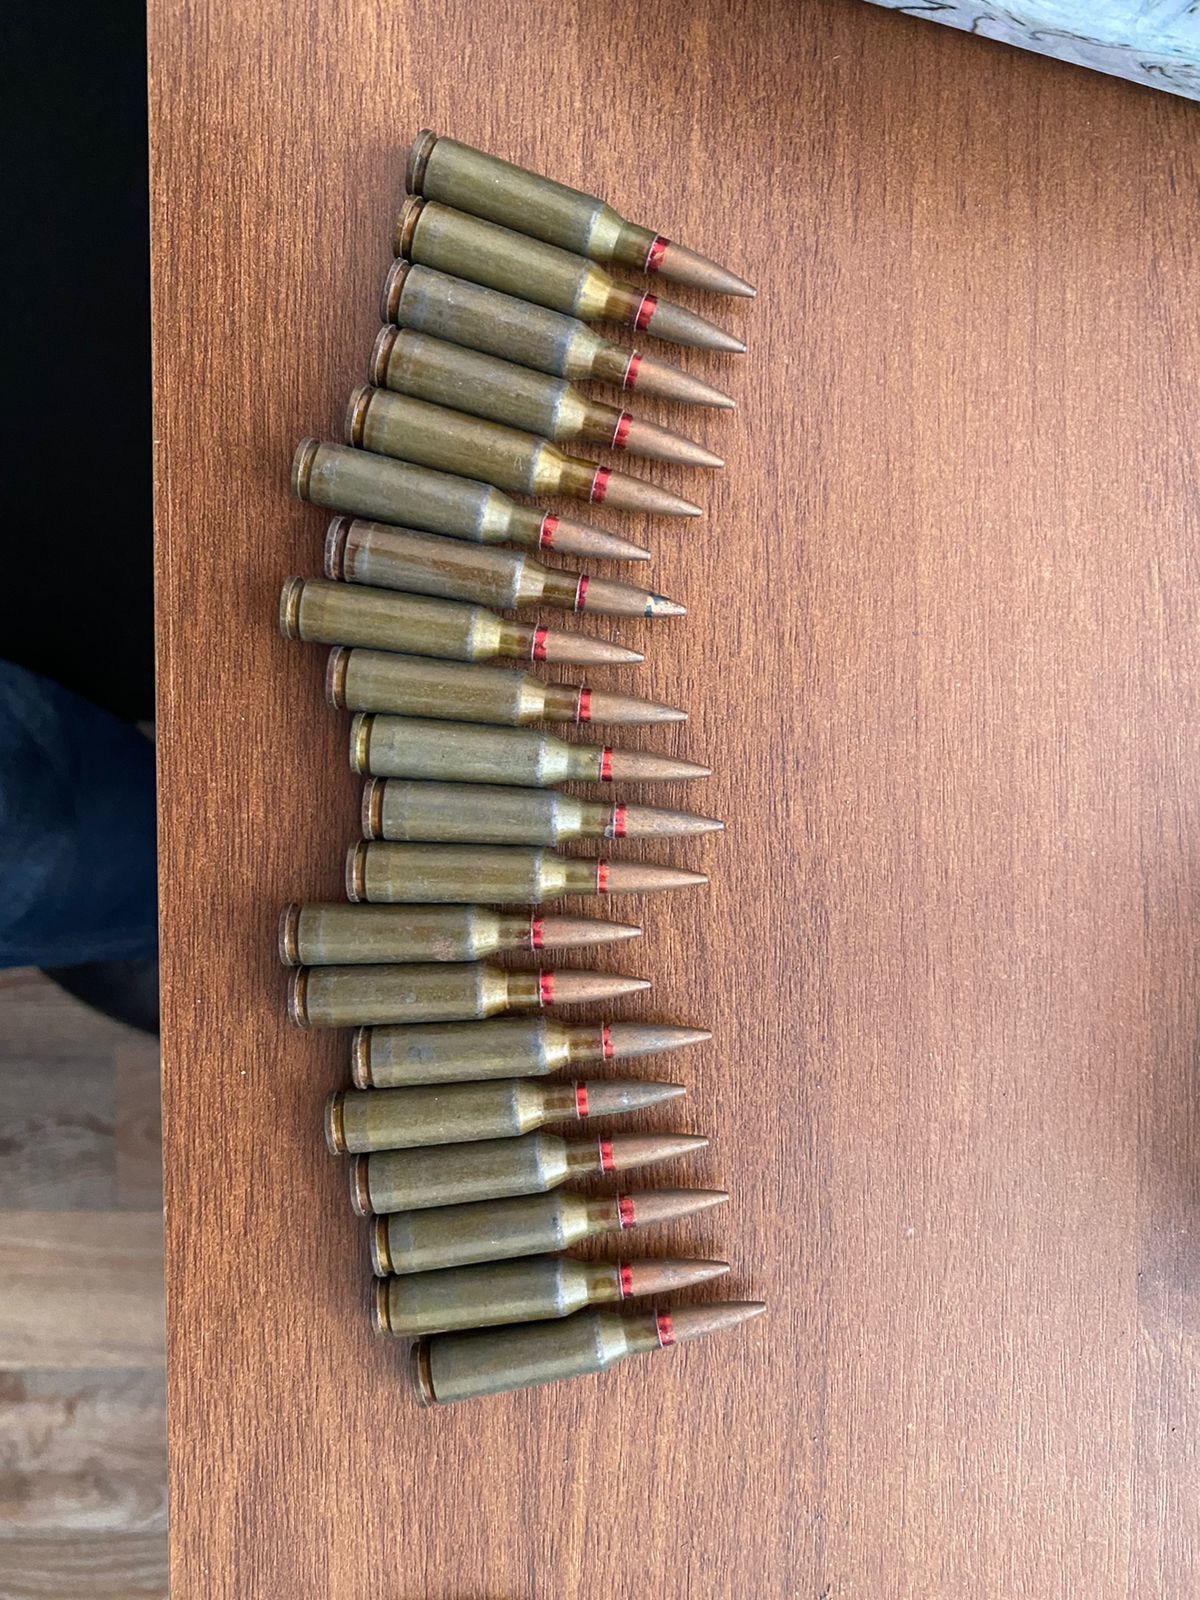 Нижнекамские полицейские изъяли арсенал оружия и боеприпасов у жителя Камских Полян